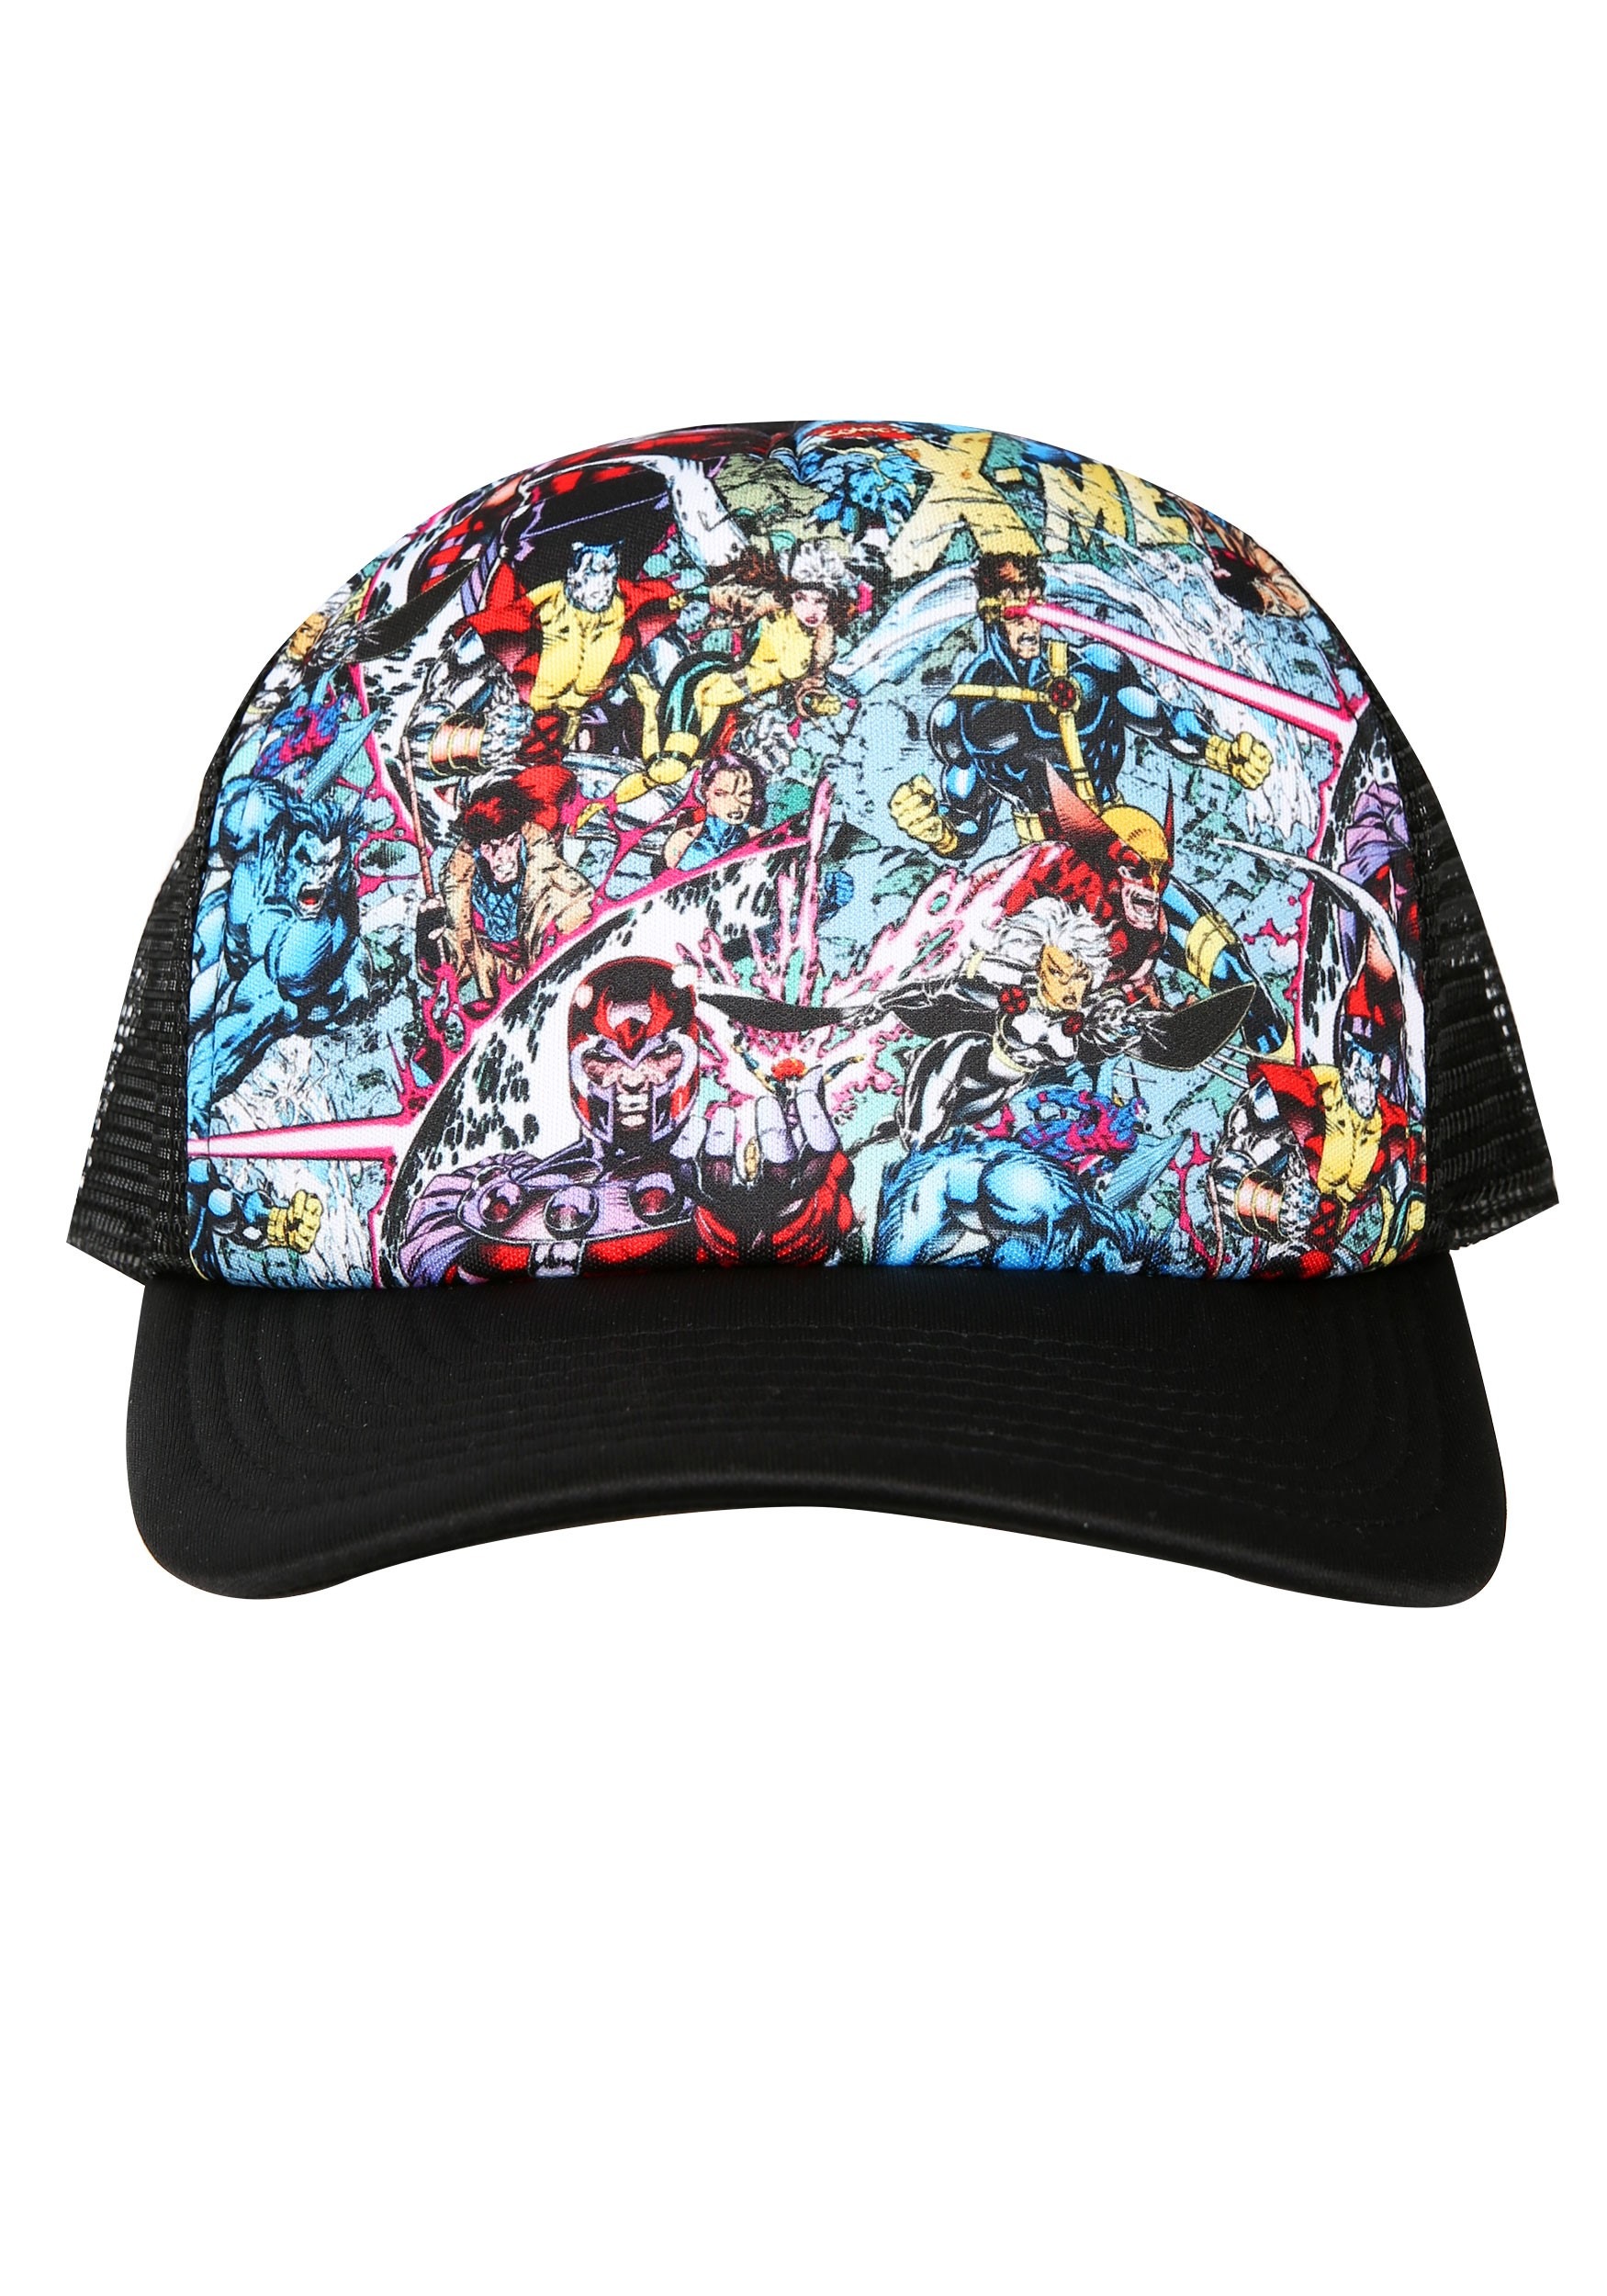 90s Comic Art Trucker Hat X-Mens | Marvel X-Men Hat | Adult | Mens | Black/Blue/Red | One-Size | Bioworld Merchandising / Independent Sales